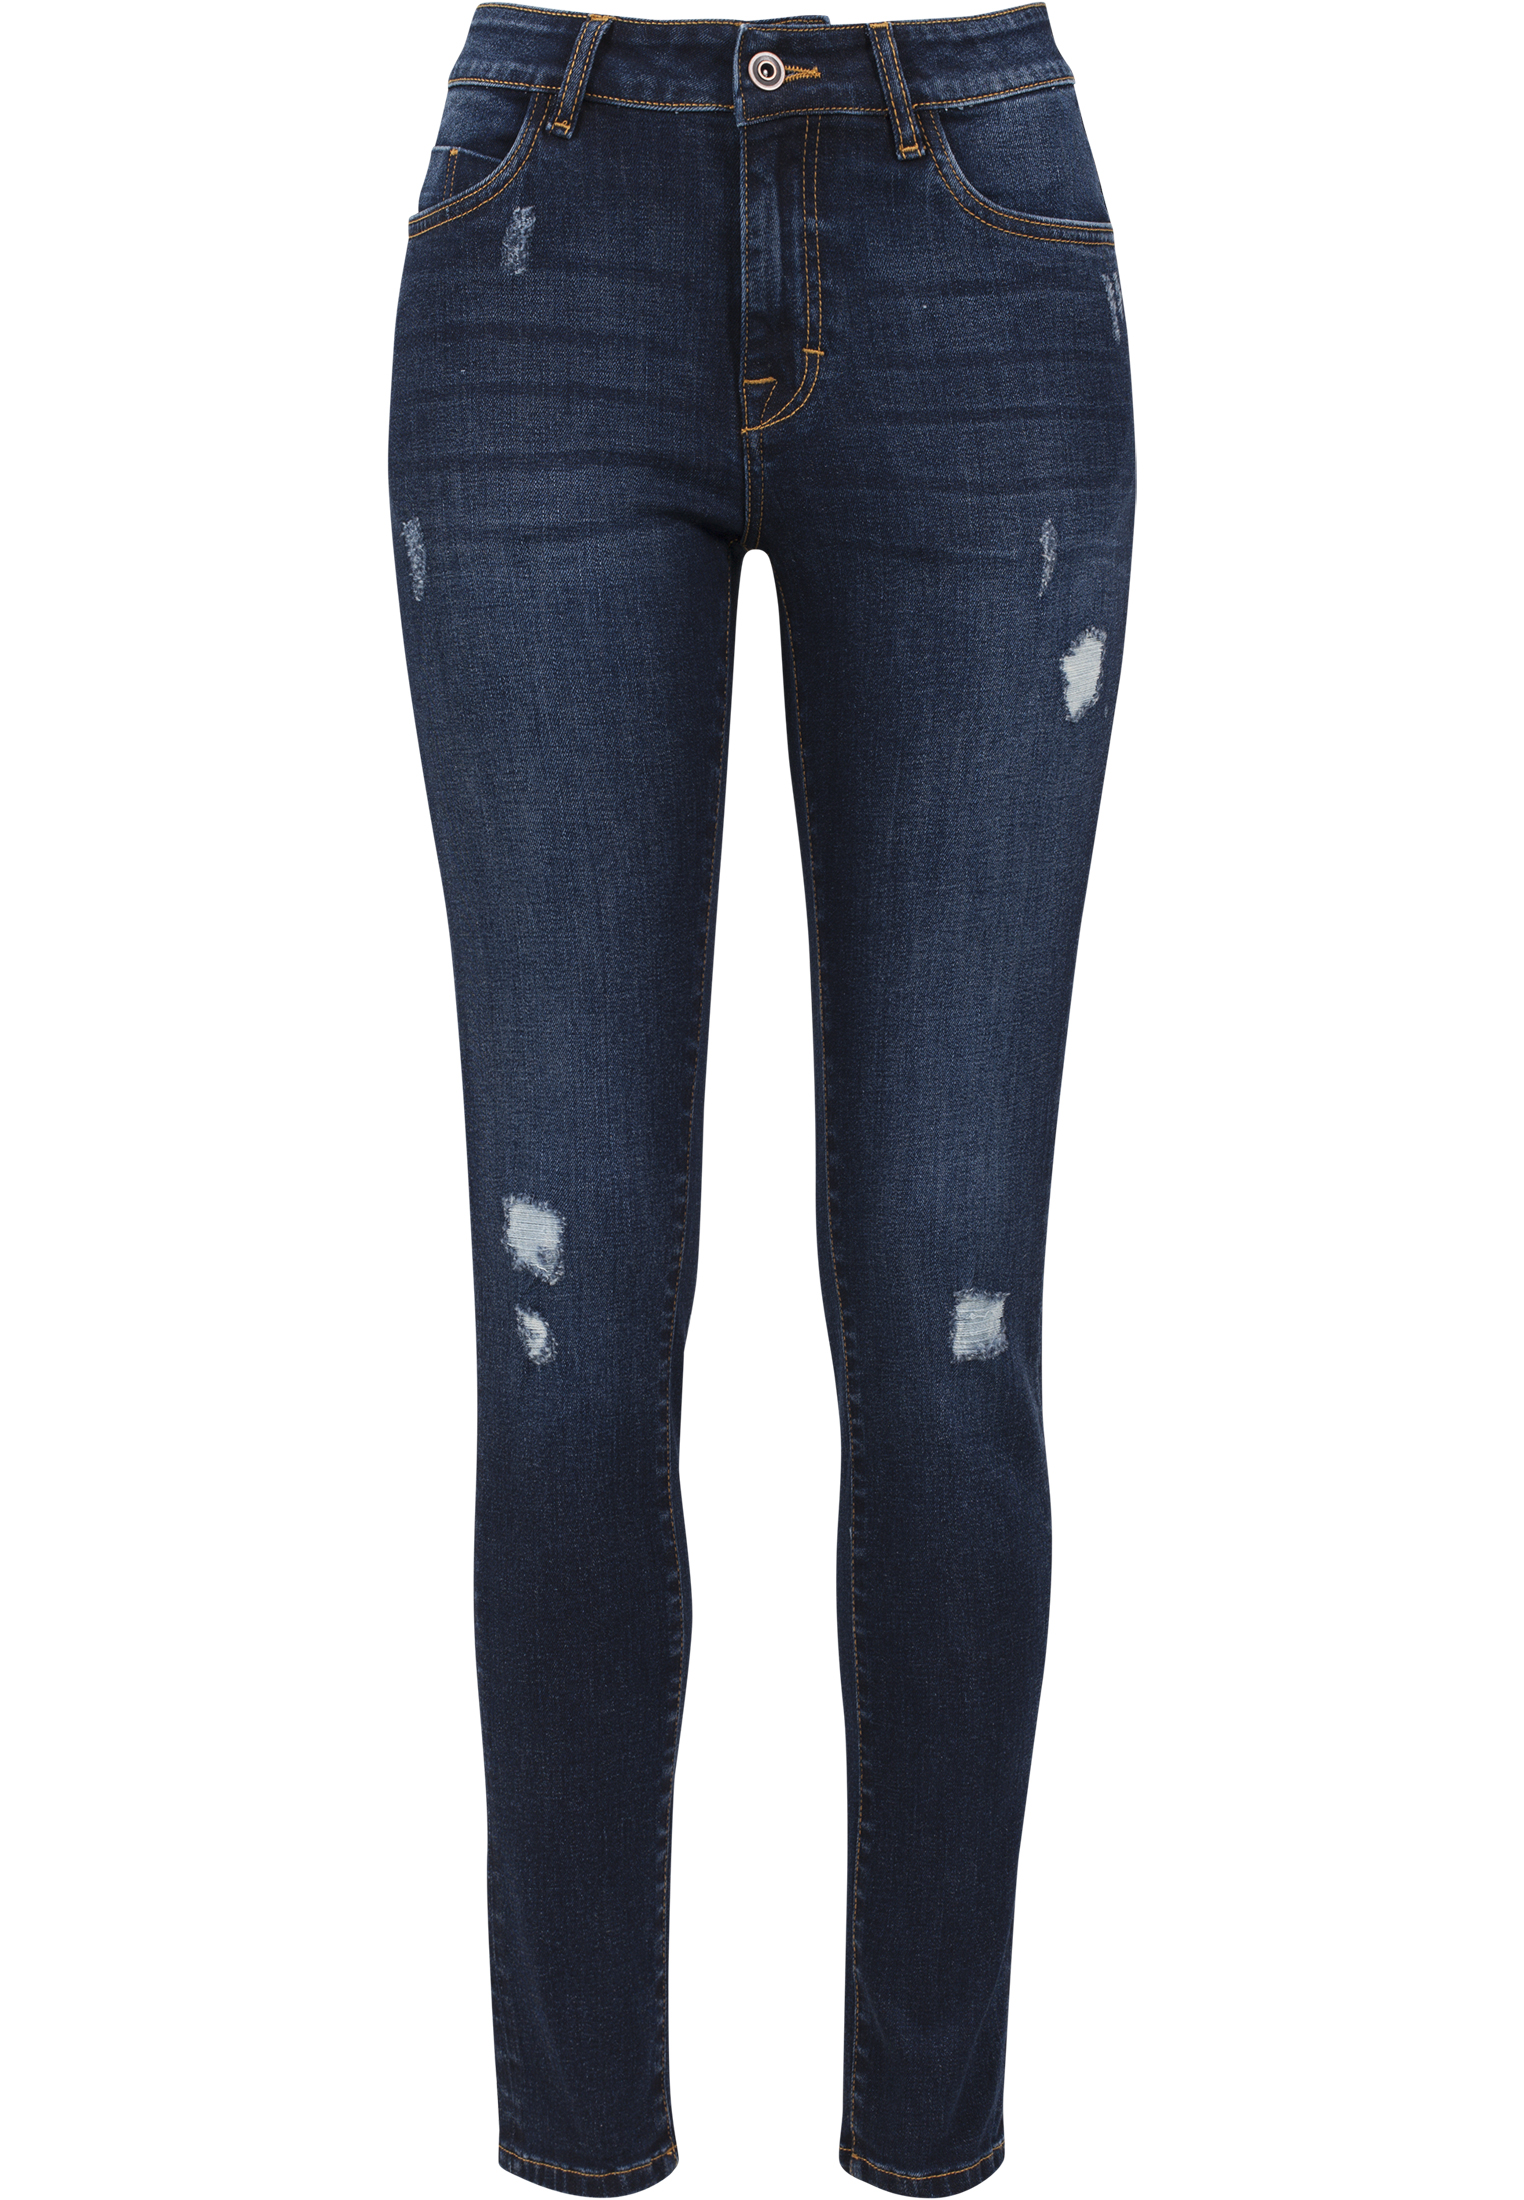 Urban Classics Ladies Ripped Denim Pants Damen Hose darkblue TB1362-00800 Jeans 